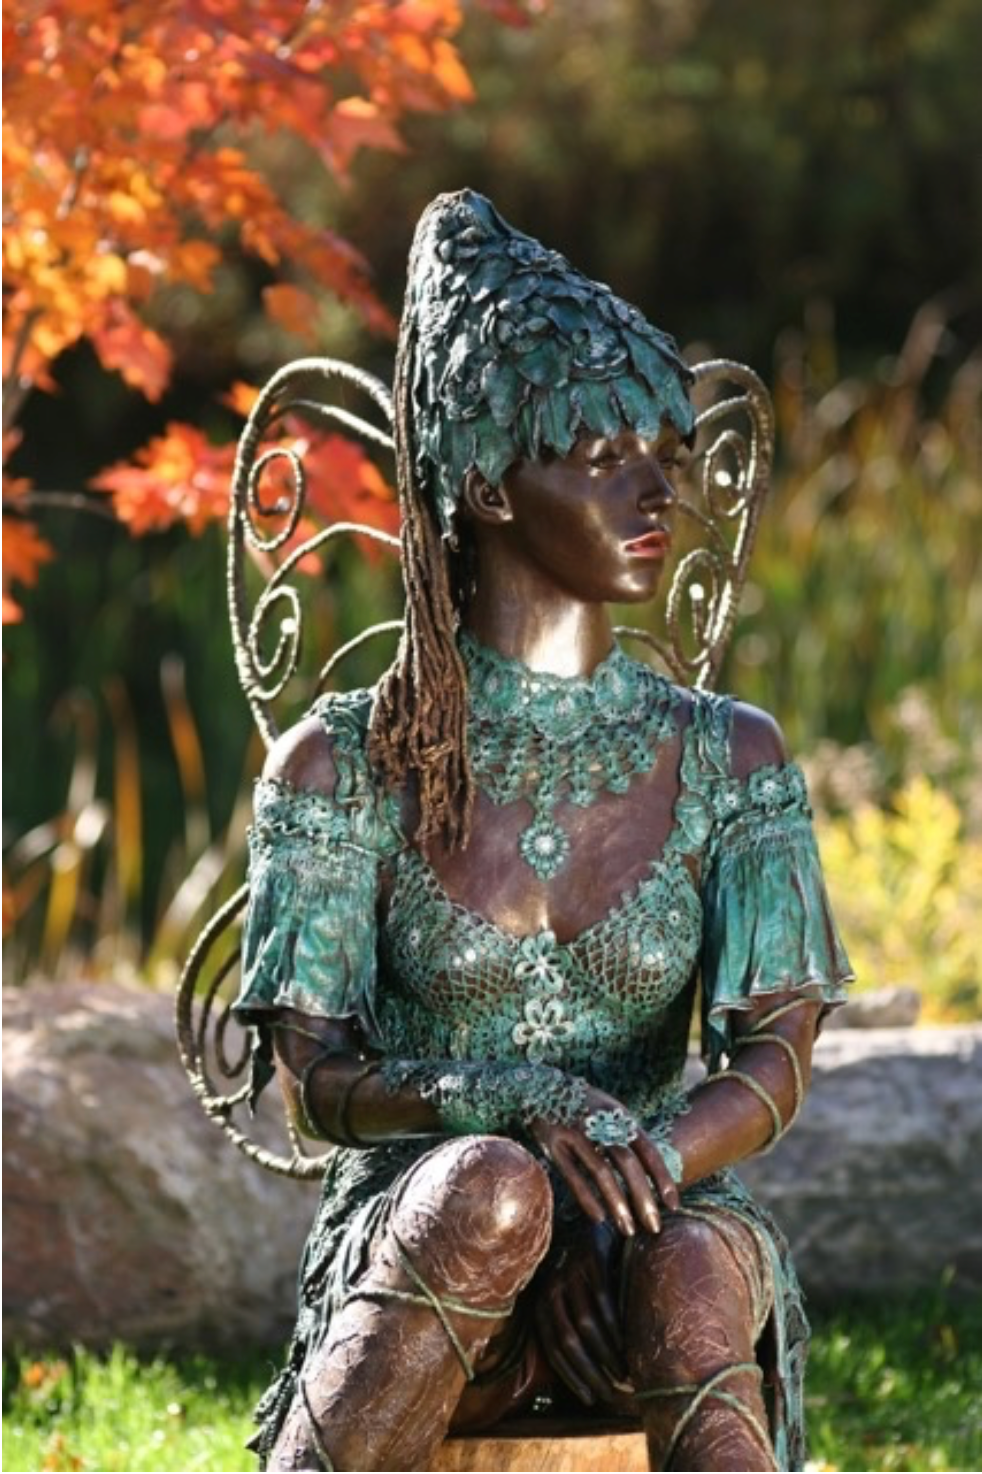 Life size Fairy Garden Sculpture by Anja Kooistra